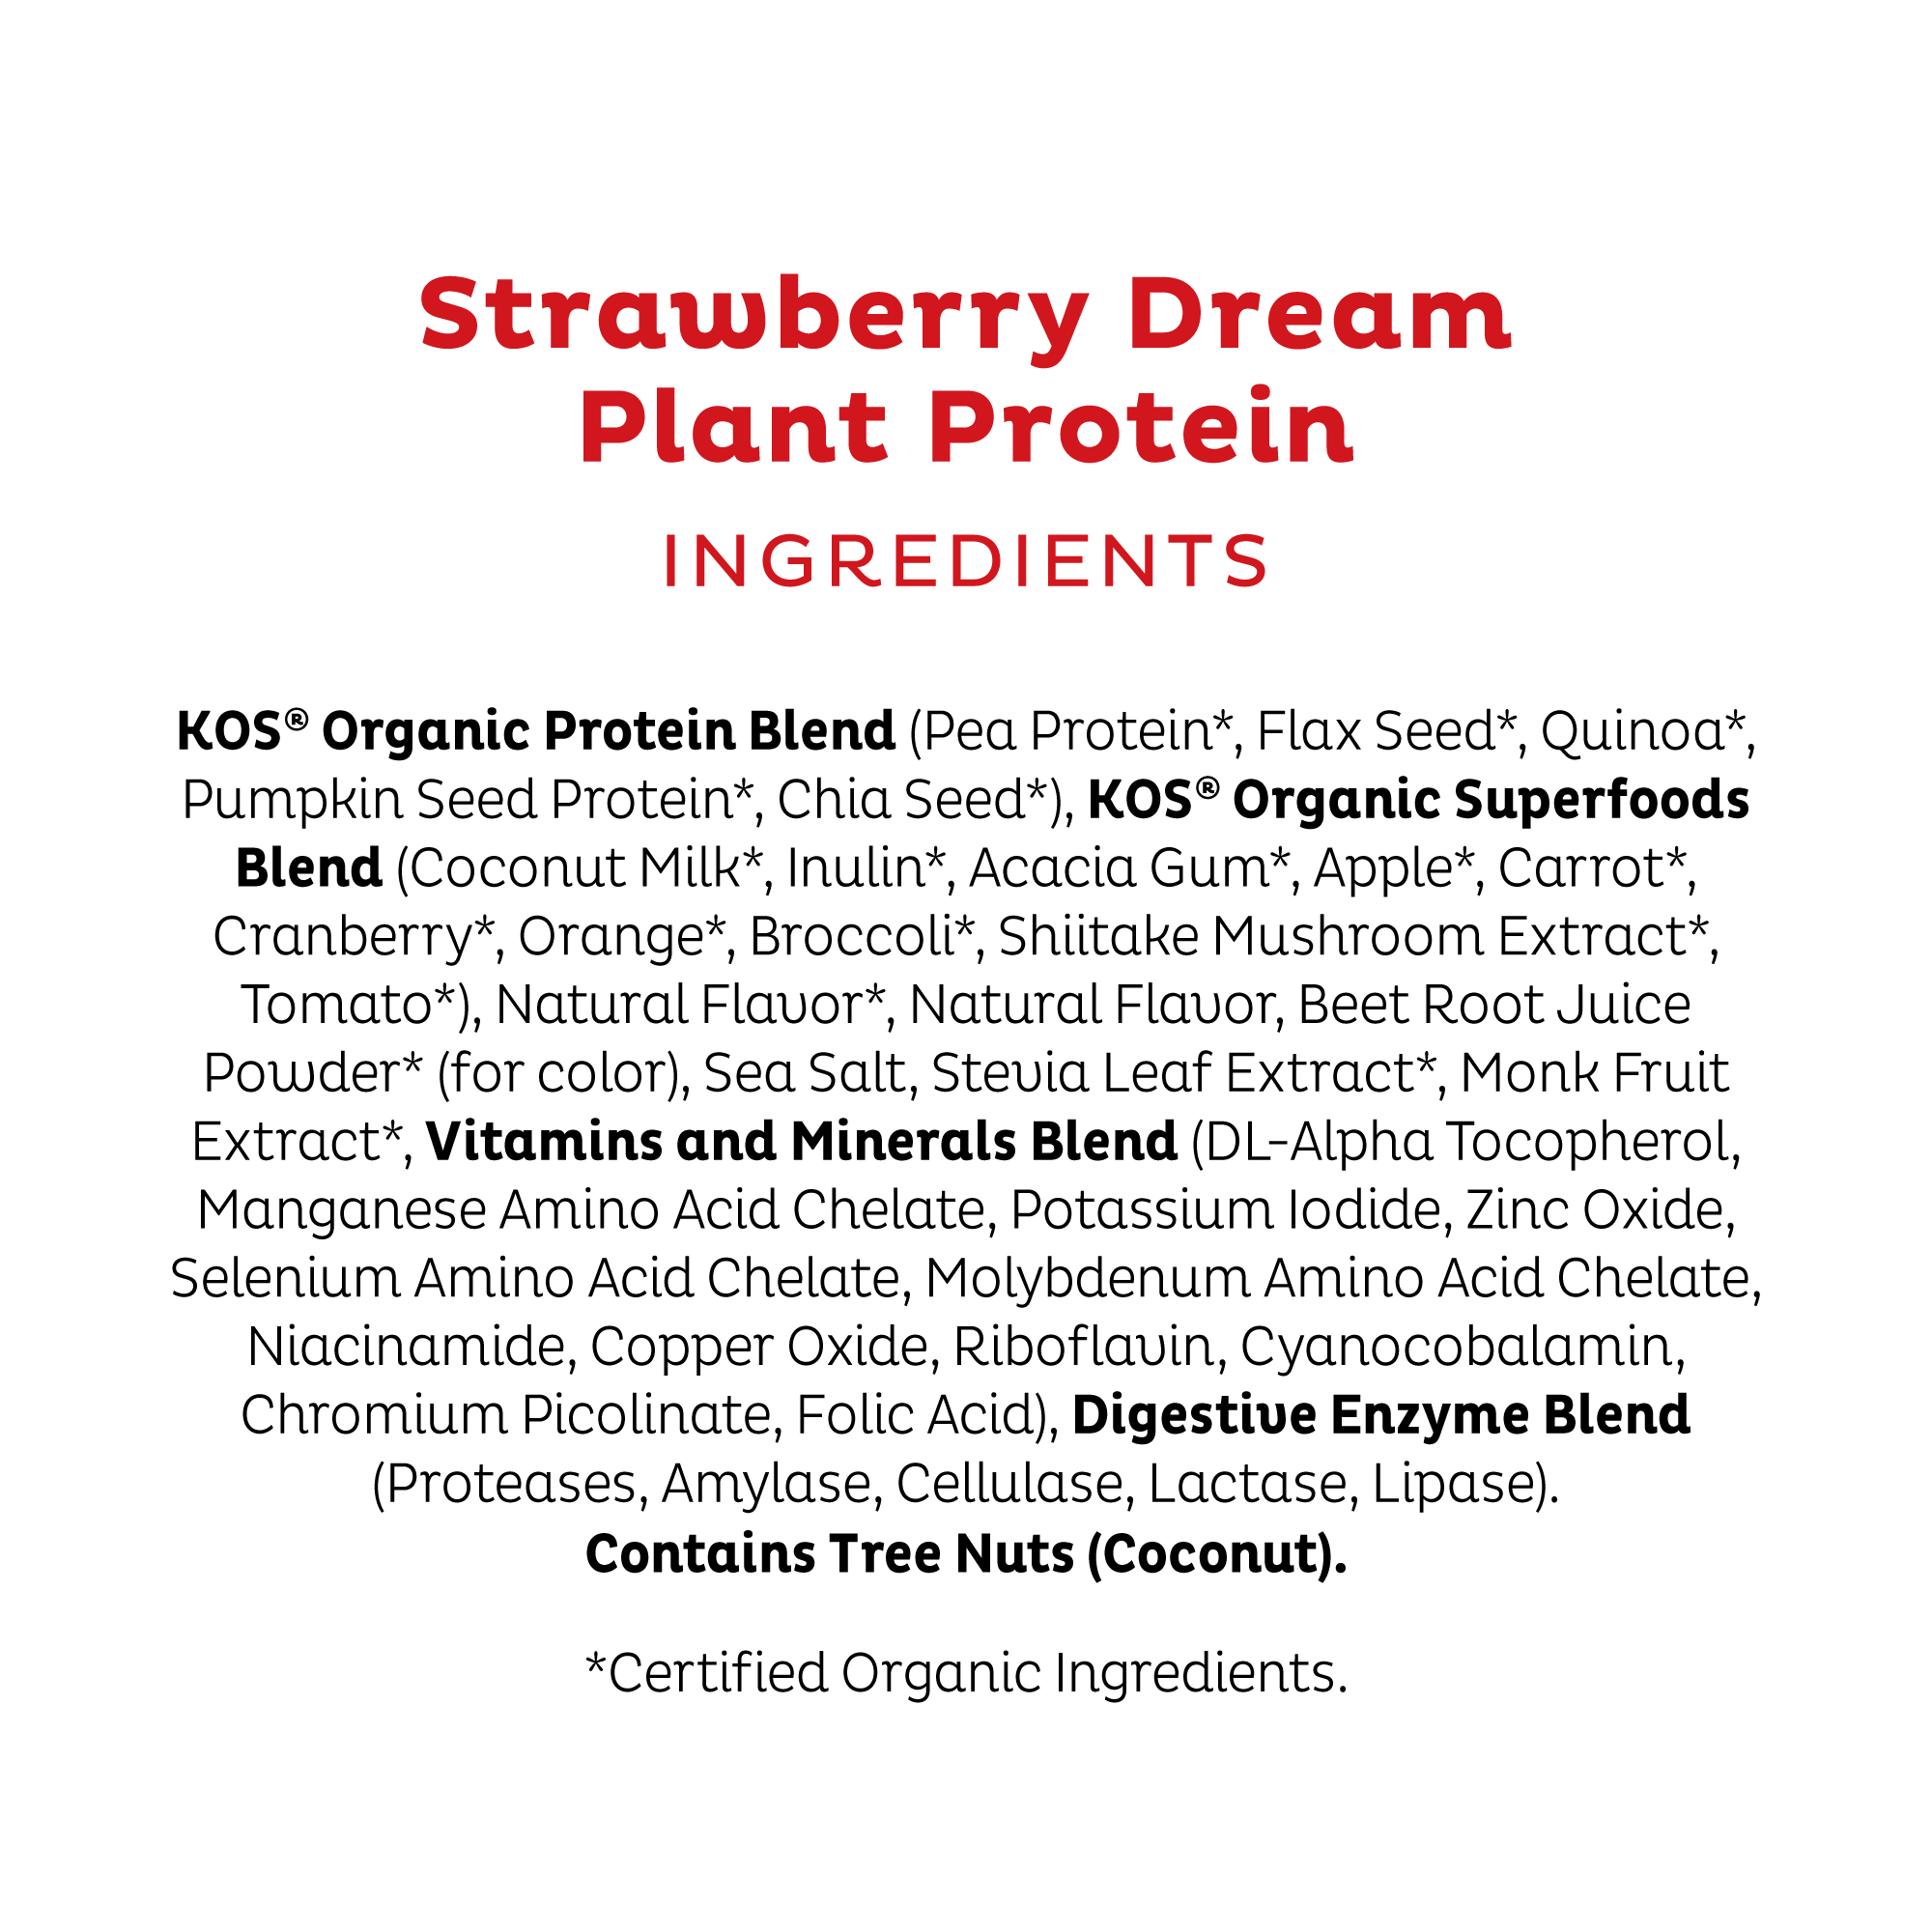 Strawberry Dream Organic Plant Protein